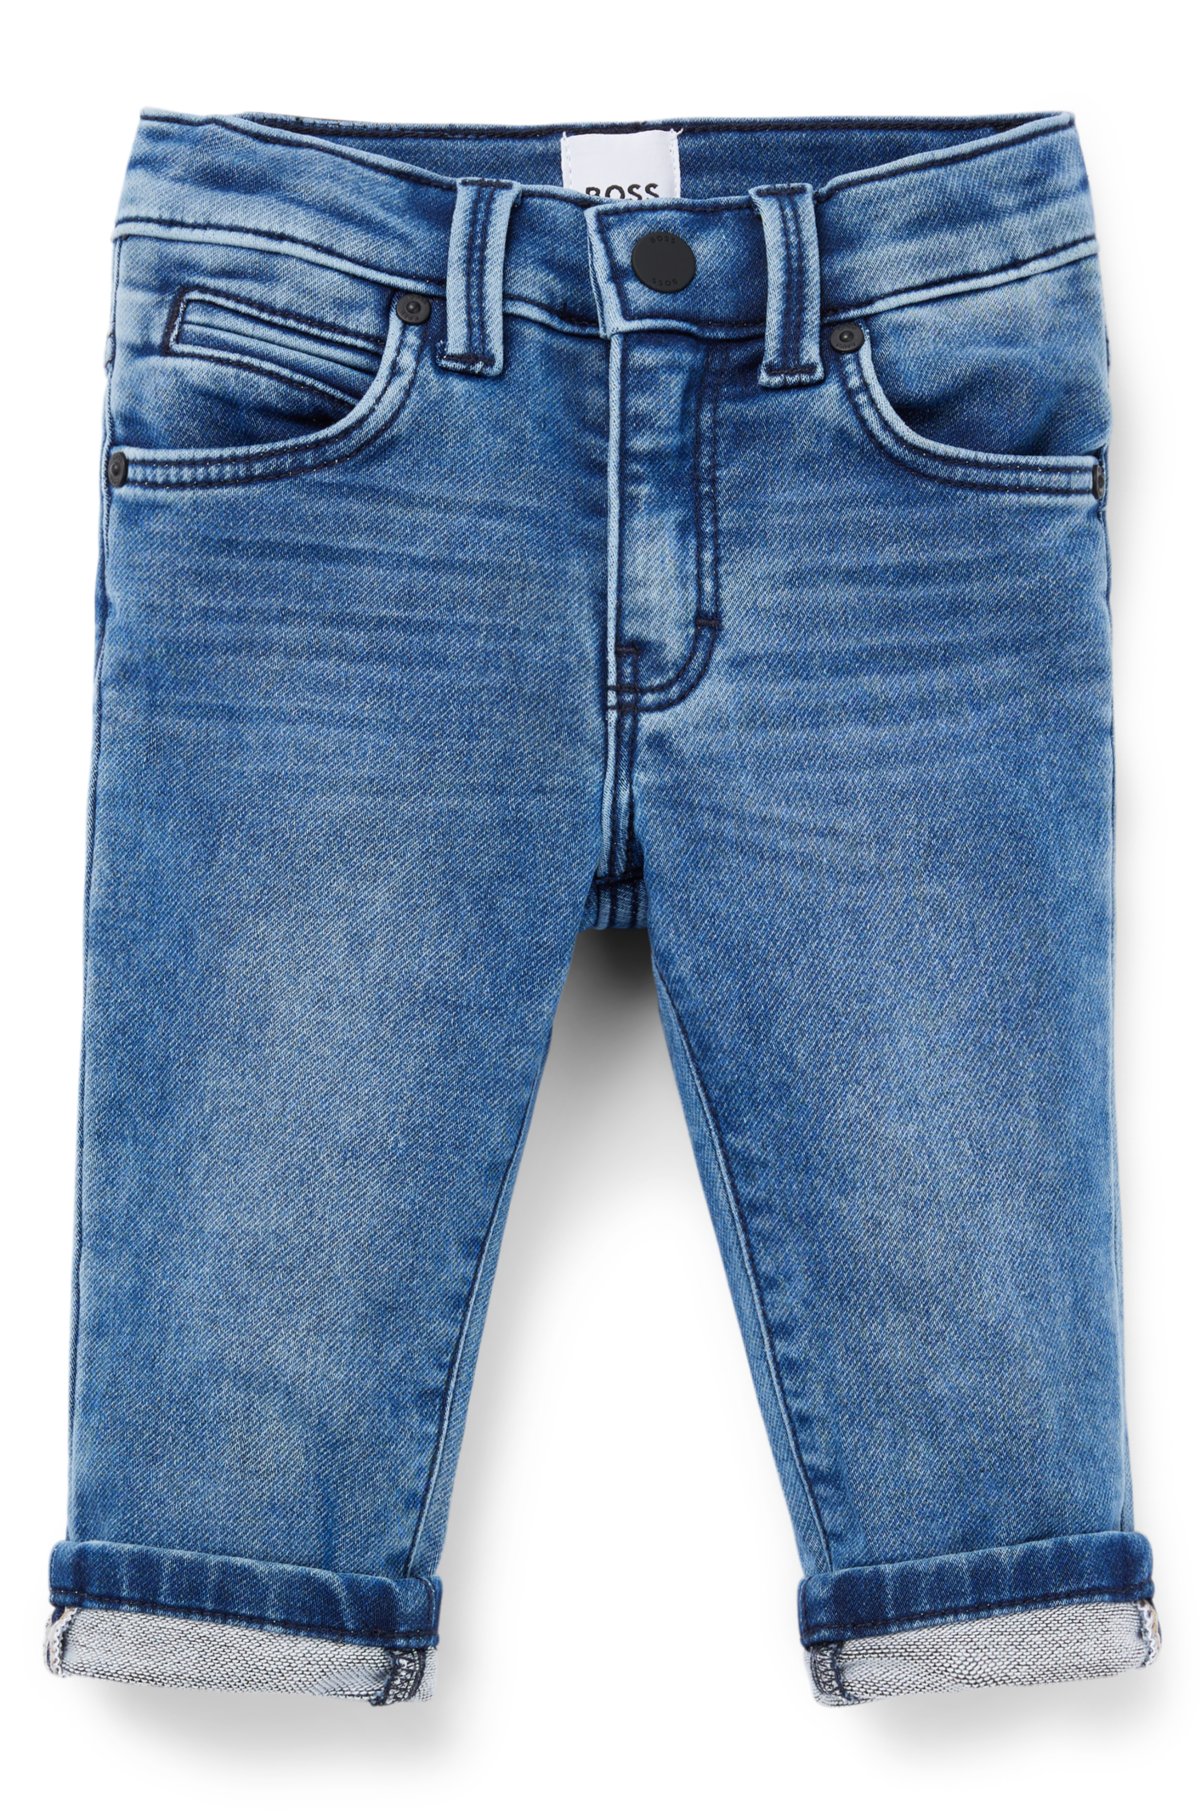 BOSS - Kids' jeans in stretch denim with branded back pocket